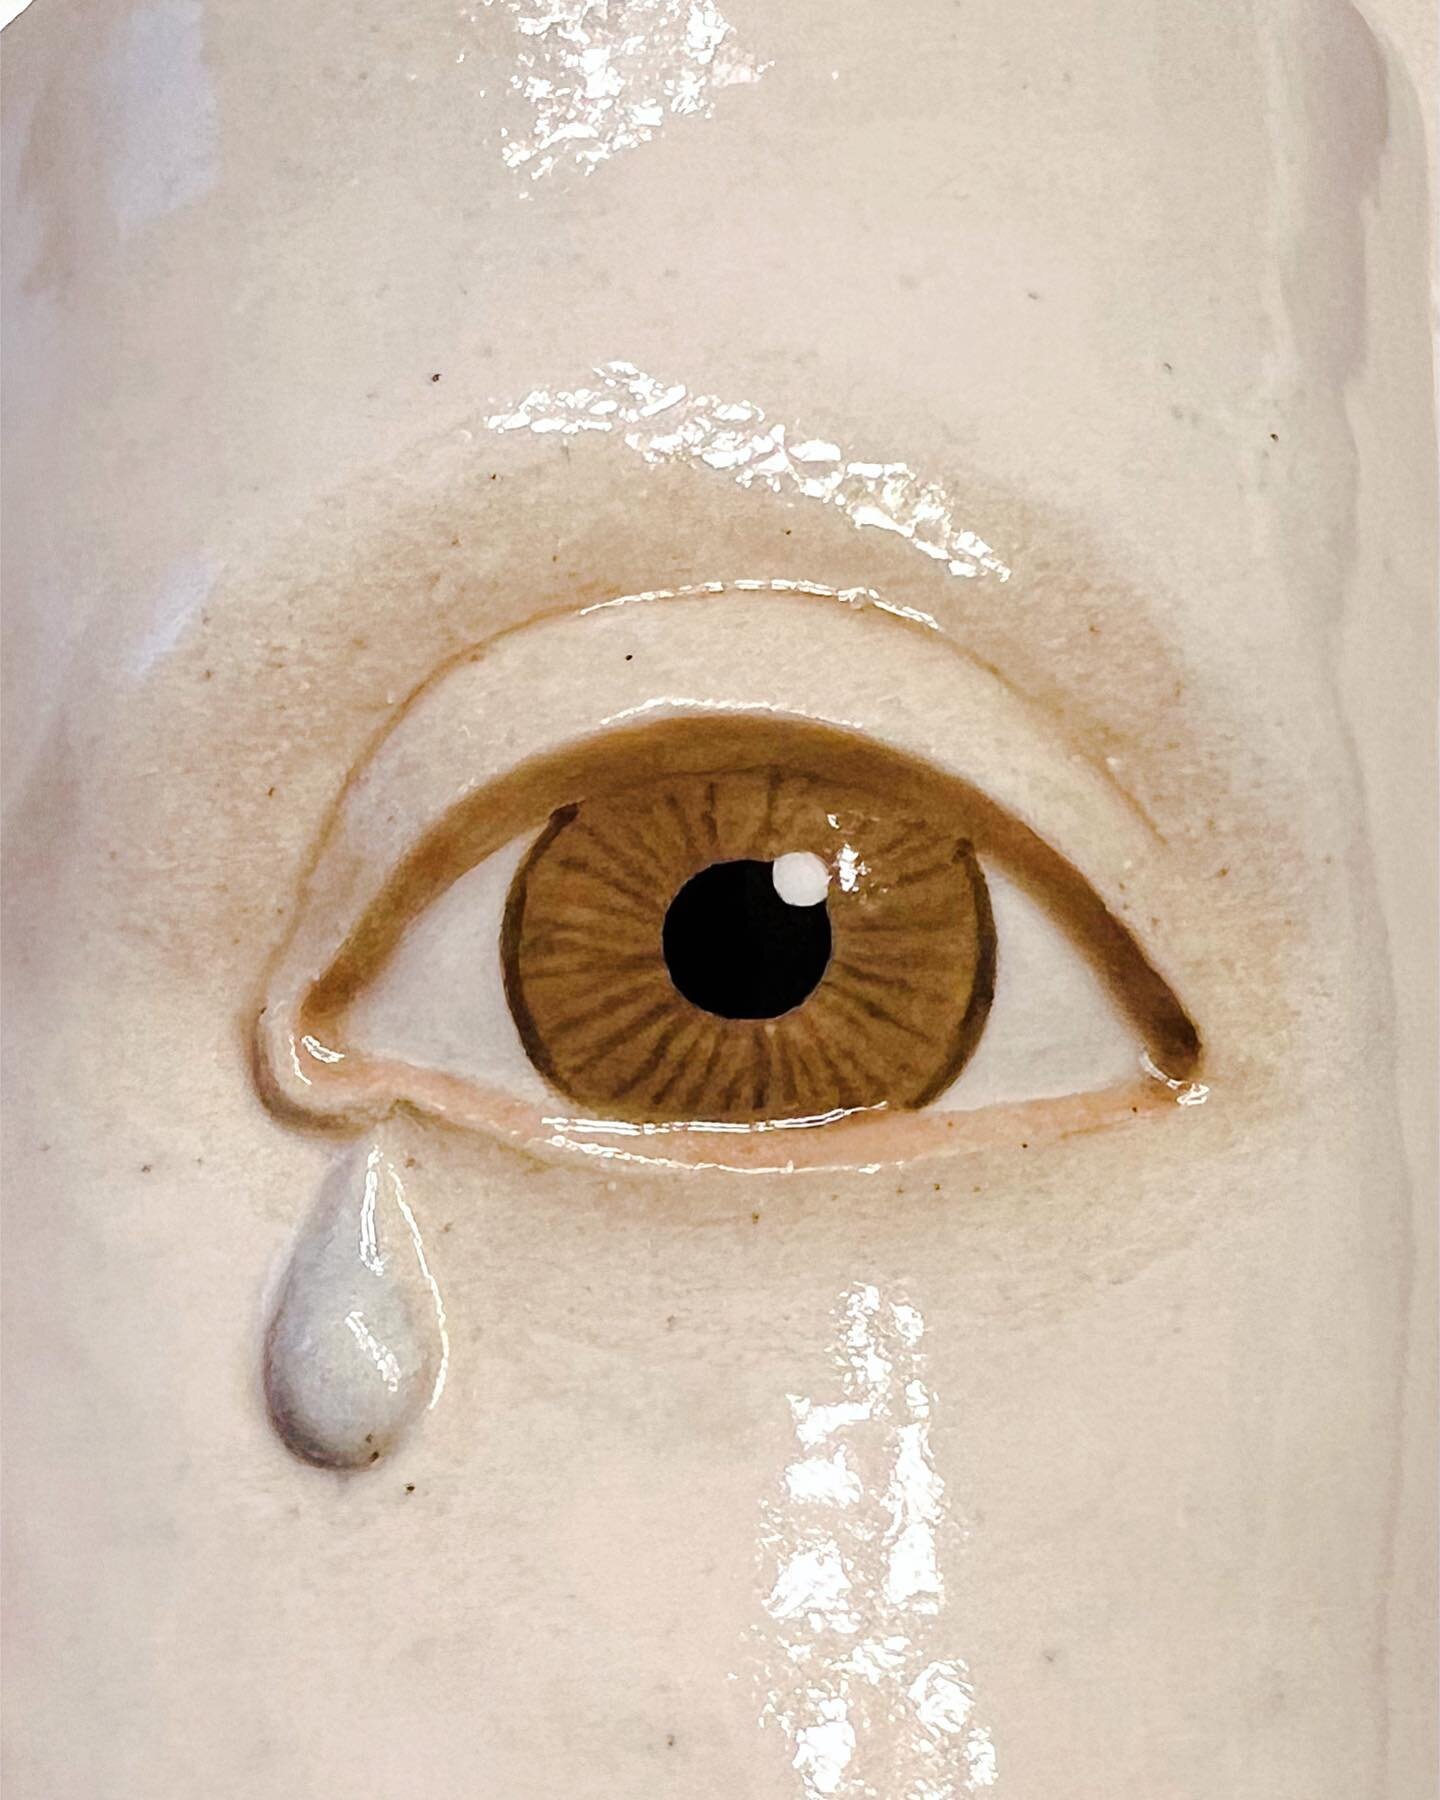 Sad eye or happy eye? Both can cry 🥲
.
.
.
#aliciaannceramics #eyeart #surrealism #eyeseeyou #oddities #curiousities #happytears #potterylife #girlswhomakestuff